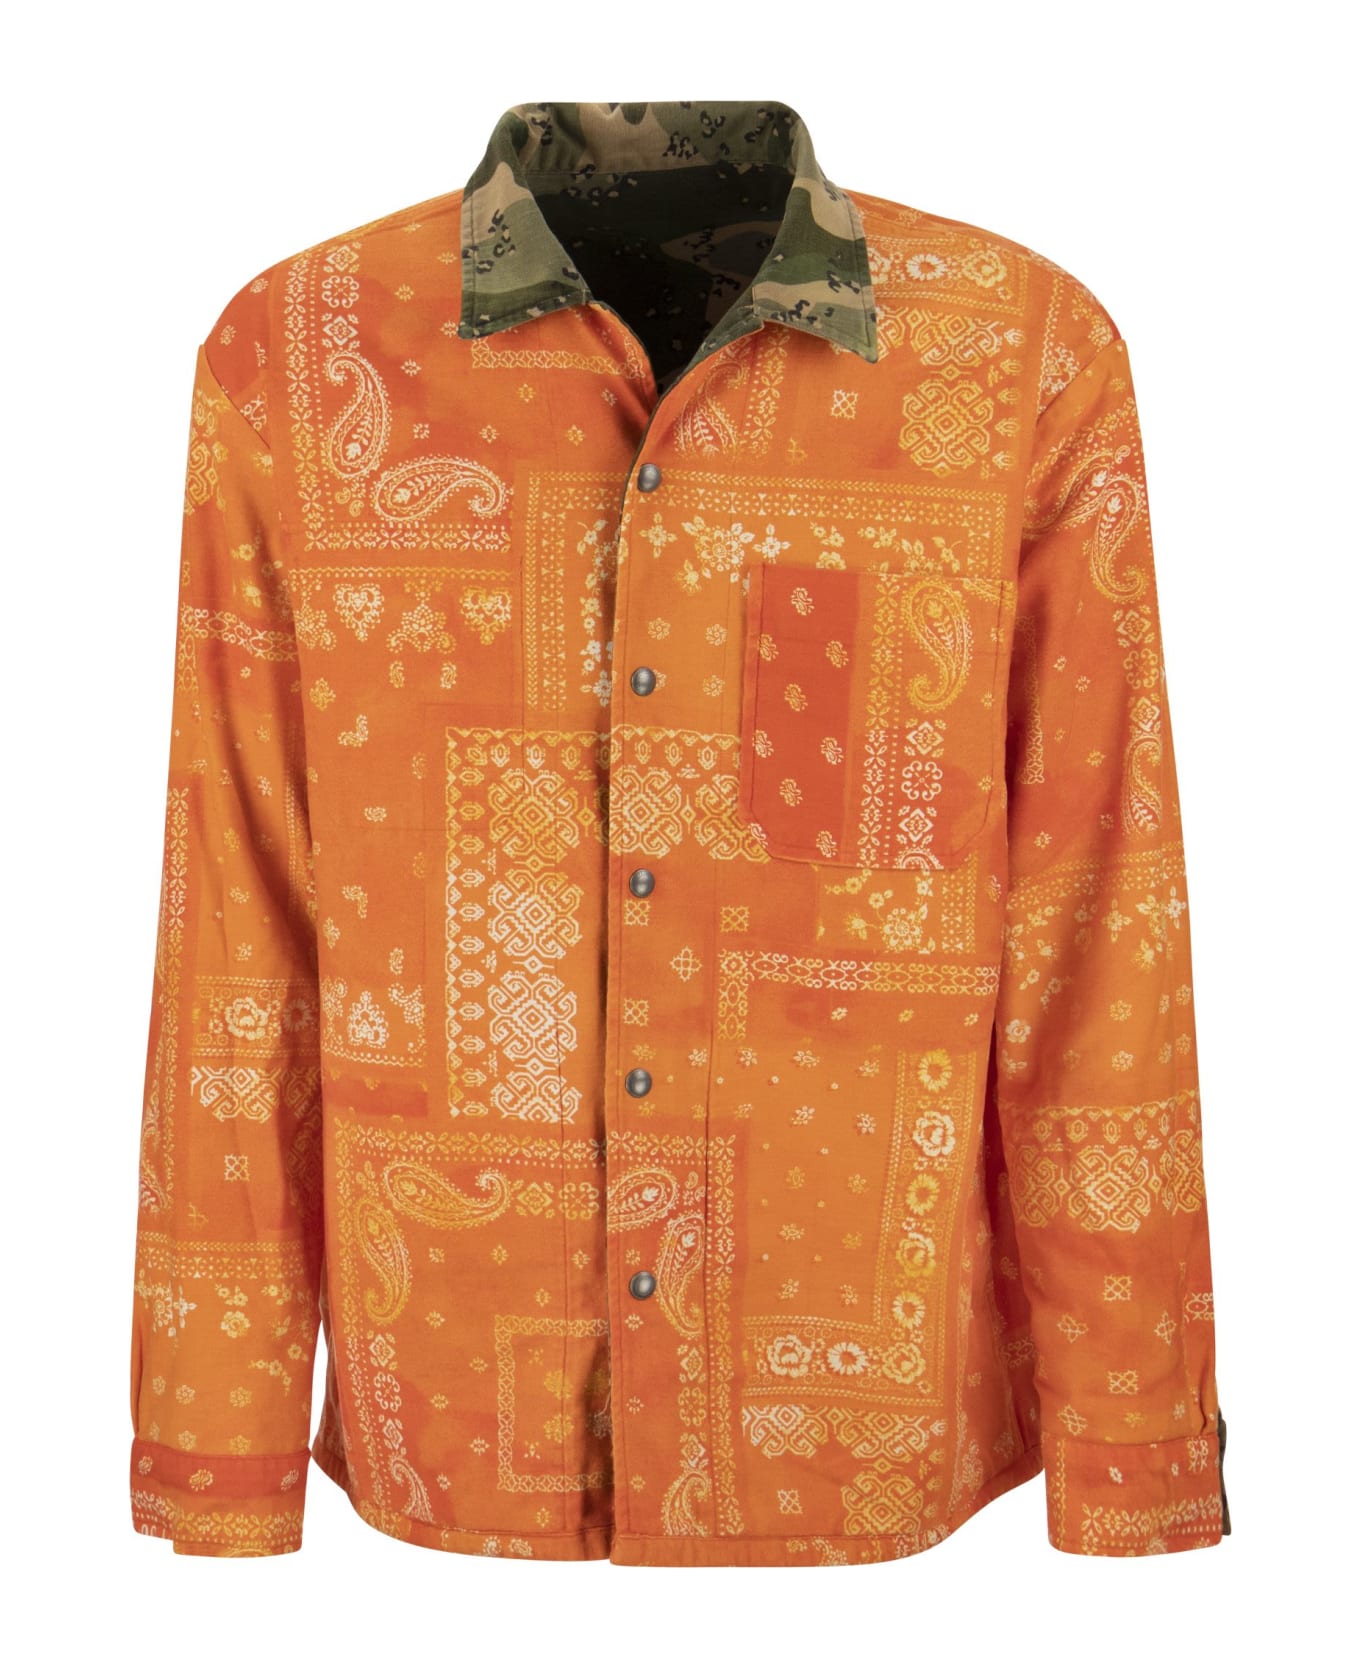 Polo Ralph Lauren Reversible Cotton Shirt - Military/orange